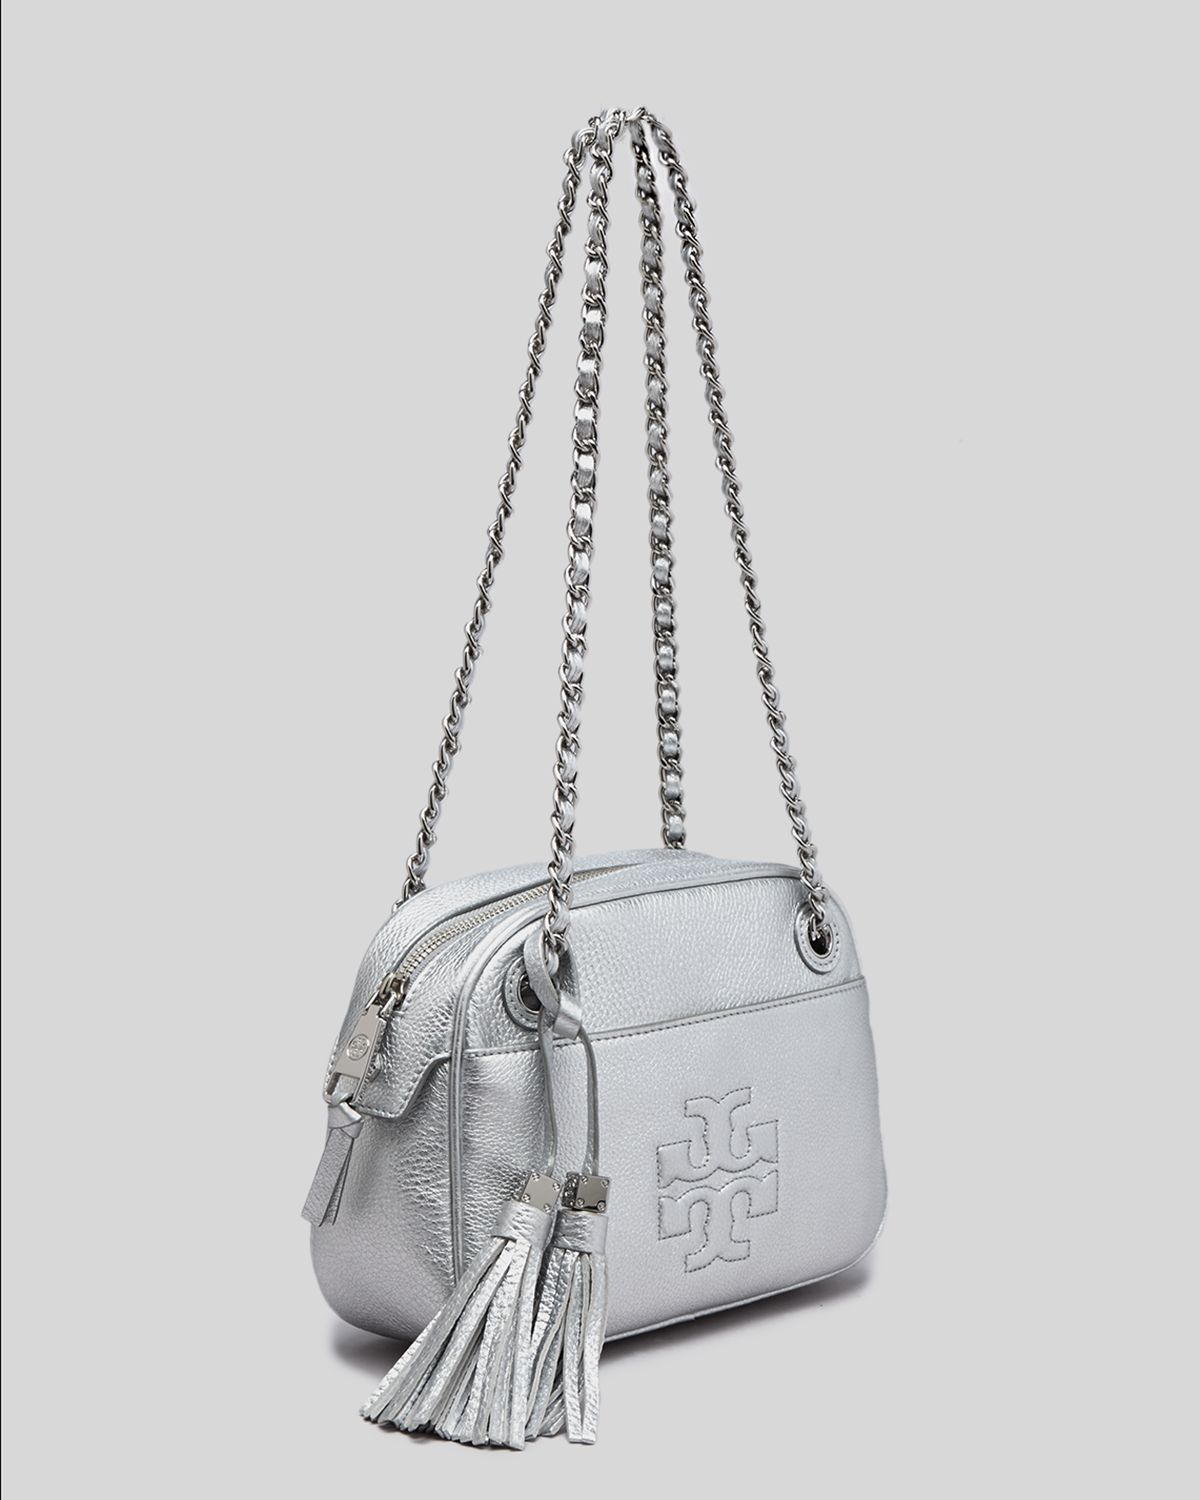 Tory Burch Thea Chain-Strap Crossbody Bag in Silver (Metallic) - Lyst